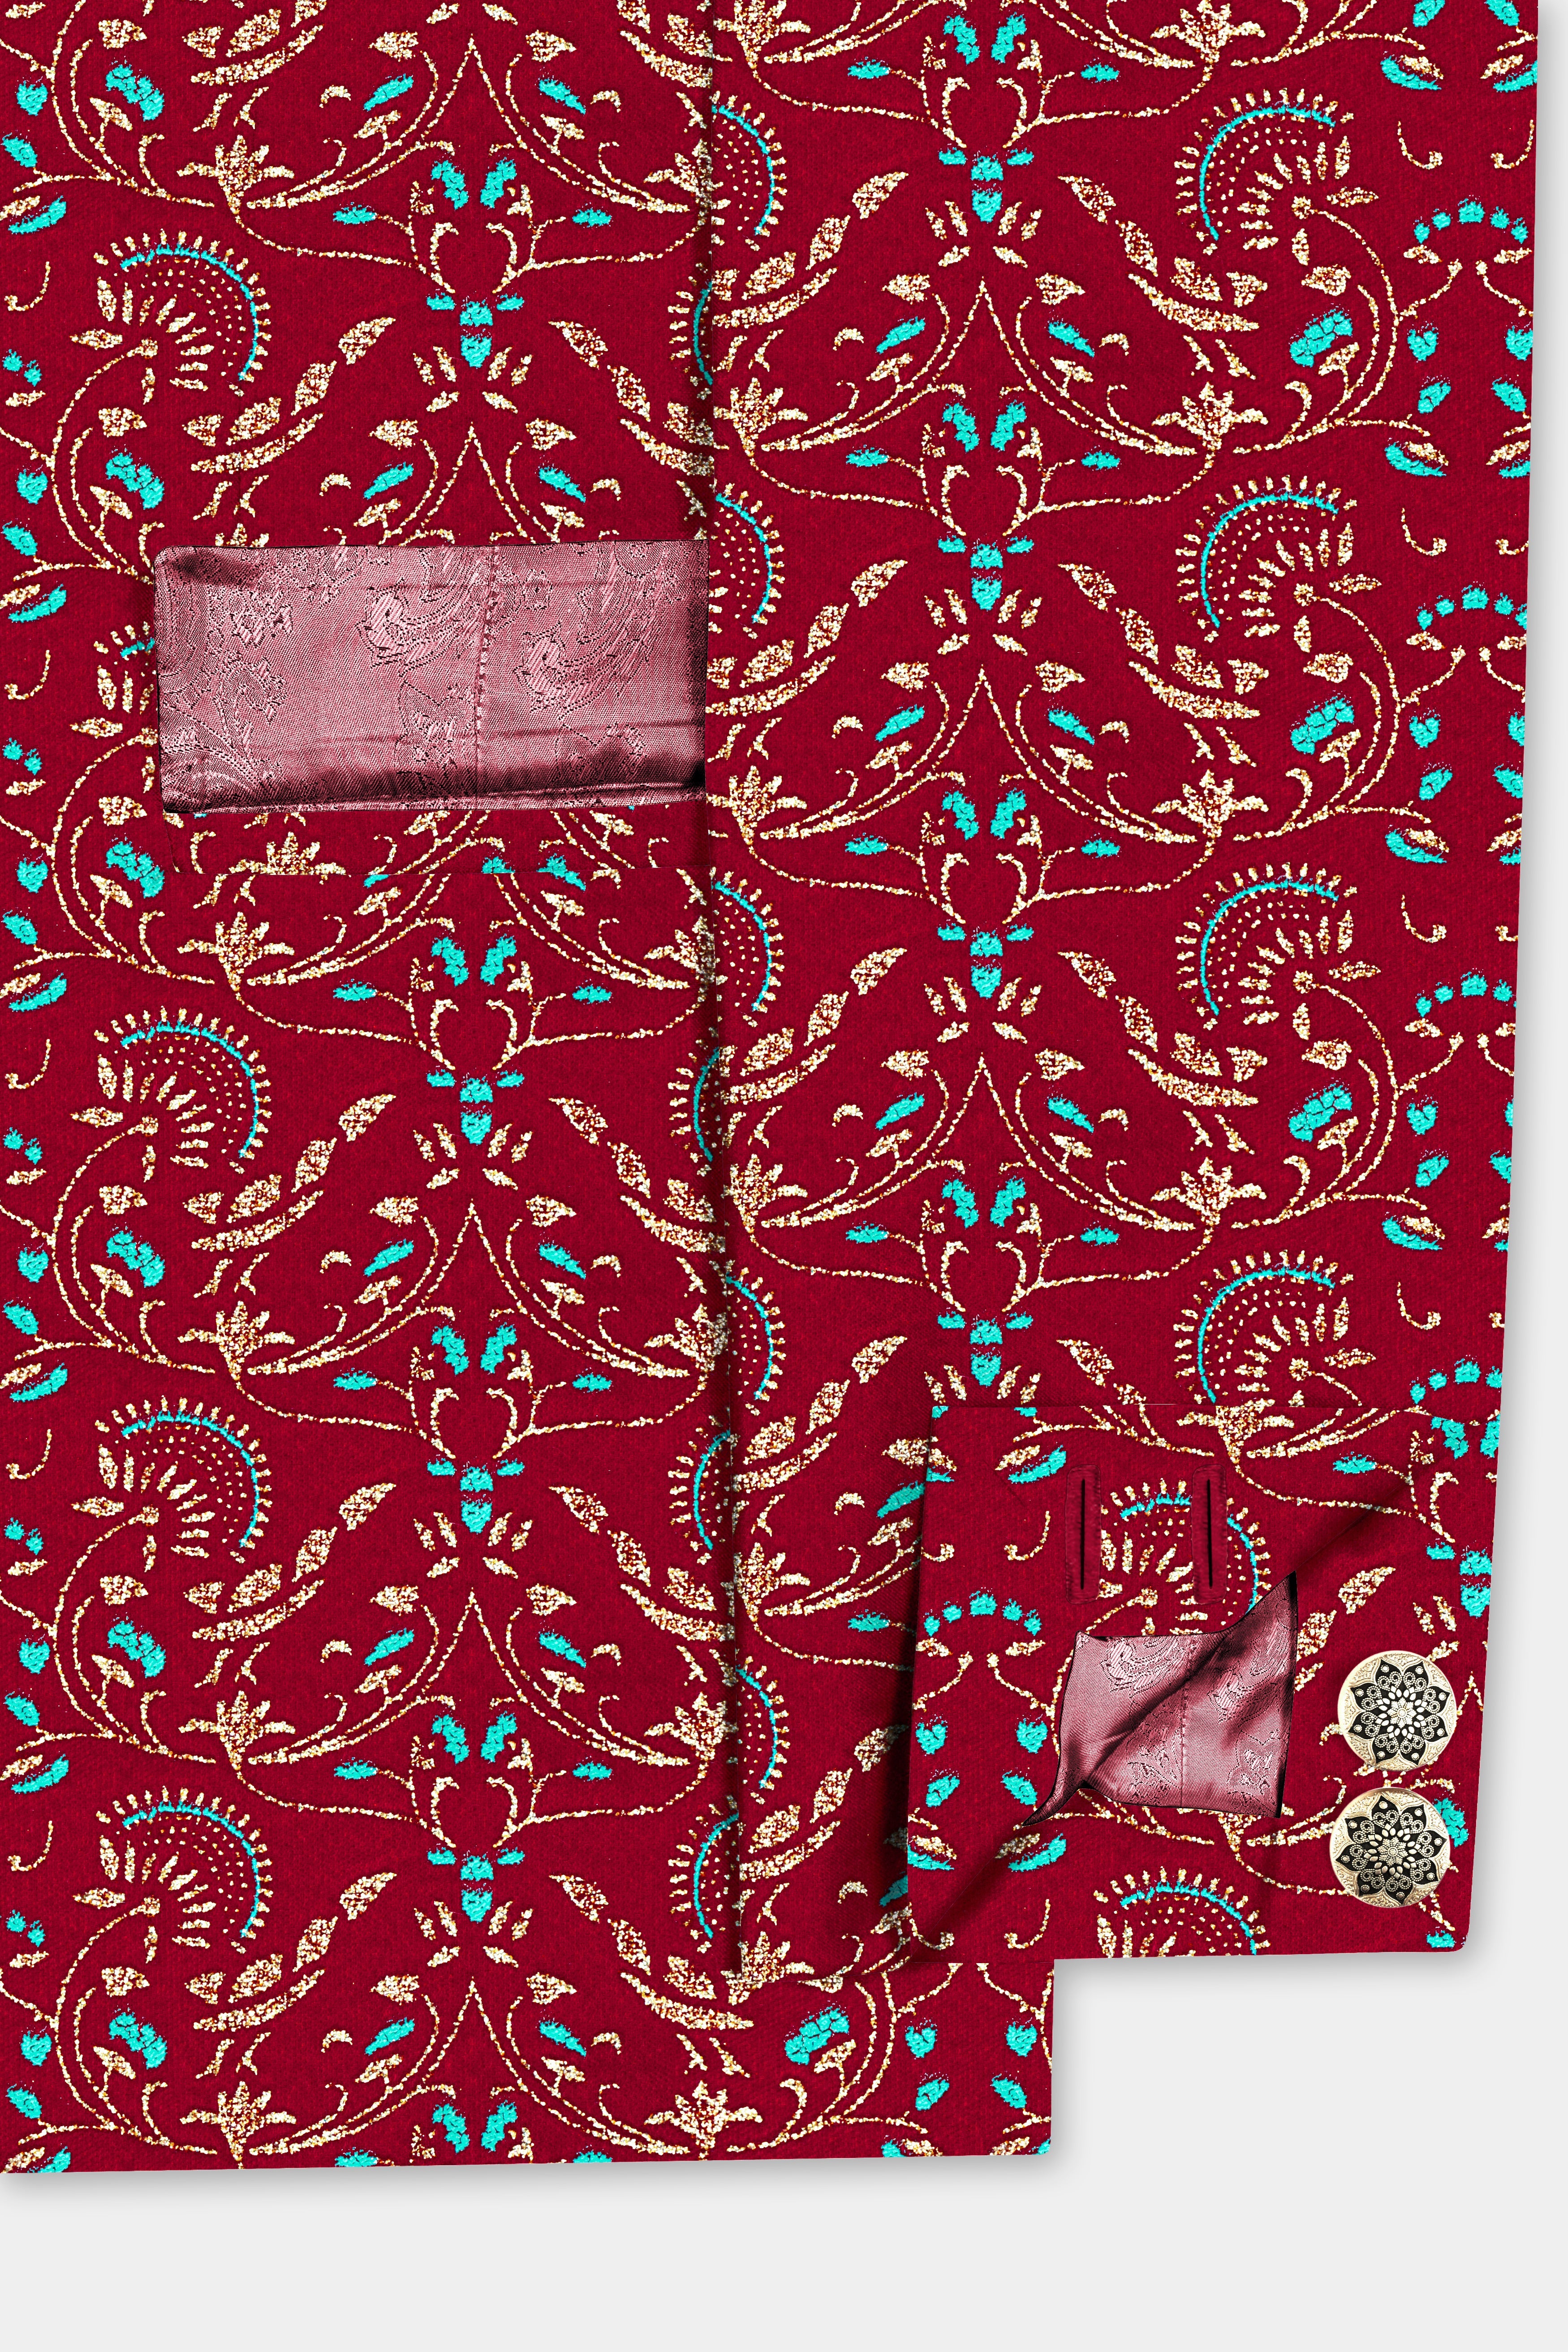 Claret Red And Aqua Marine Blue Velvet Printed Designer Bandhgala Jodhpuri